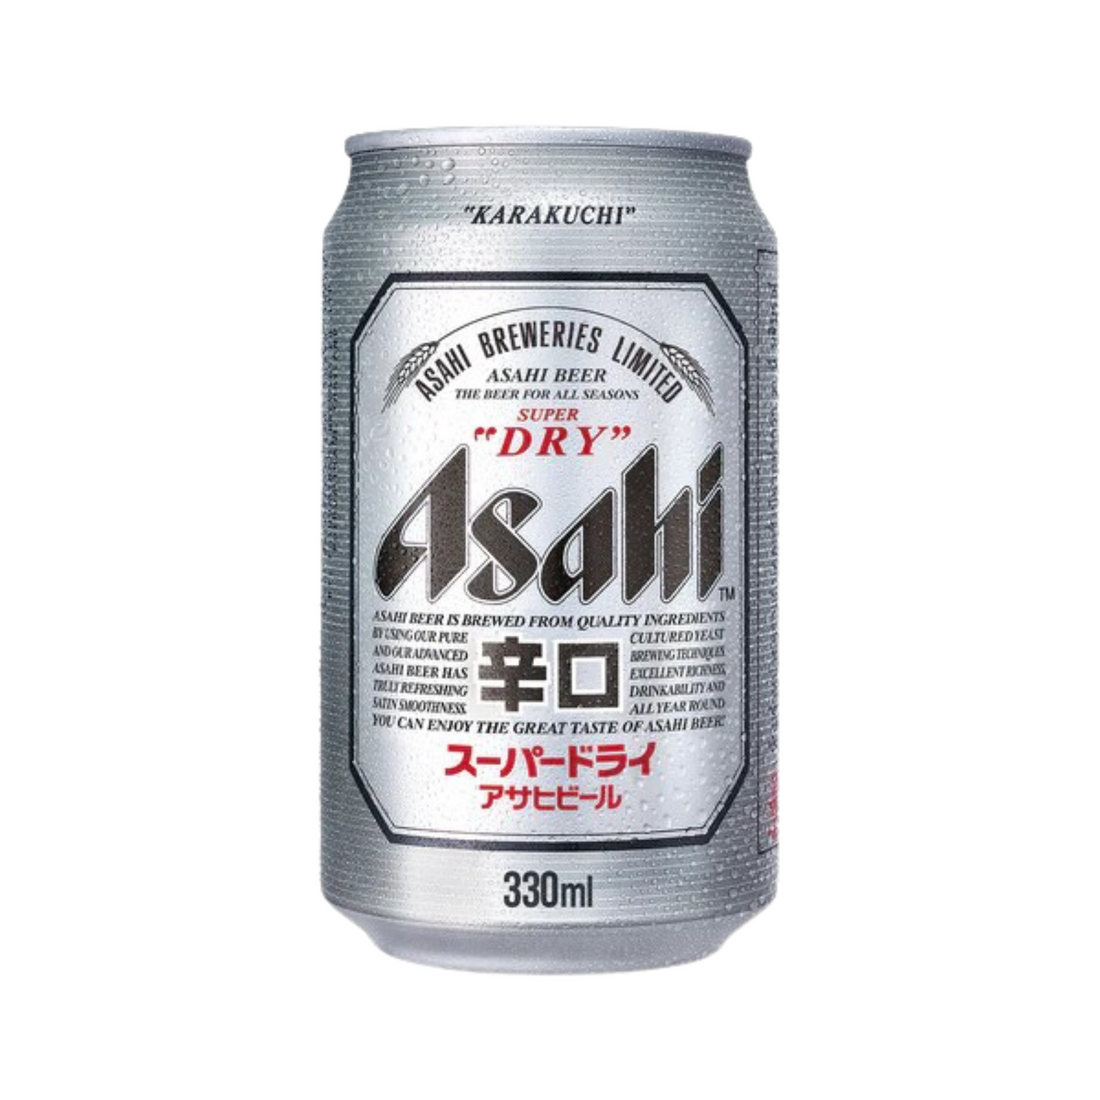 Asahi Super Dry, 330mL X 6 Cans